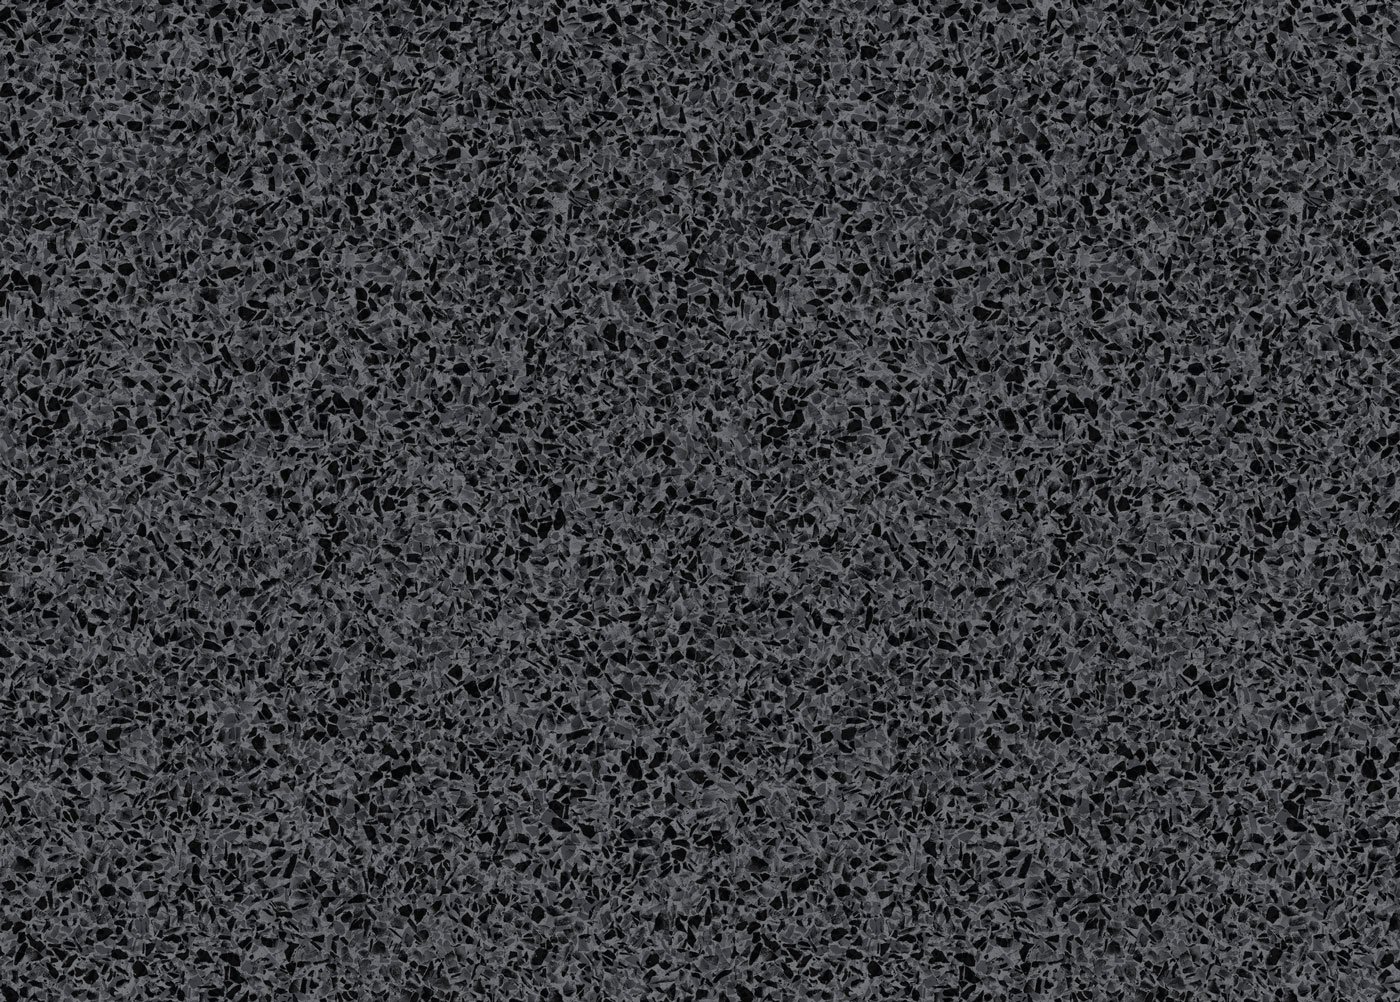 Grey-Stardust-2020-Sept22.jpg